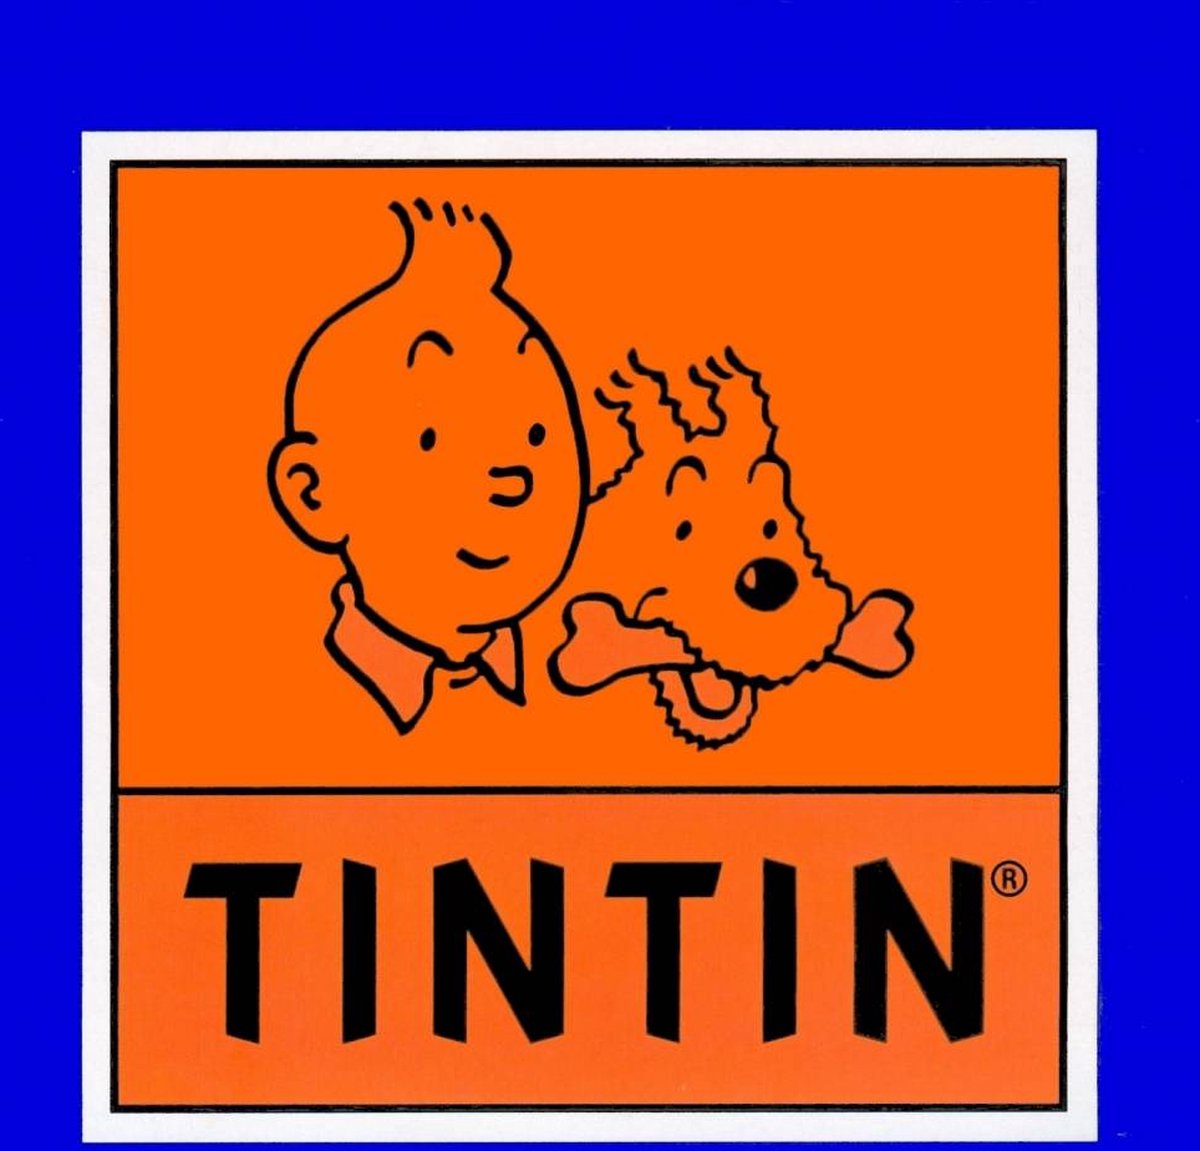 Tintin / Tintin - Soviet fighter plane with Tintin figure (Moulinsart) #29529 - aeroplane, Airplane, Destination Moon, Kuifje, Moon, moulinsart, Soviets, Tintin, Tintin Soviets - Gadgetz Home